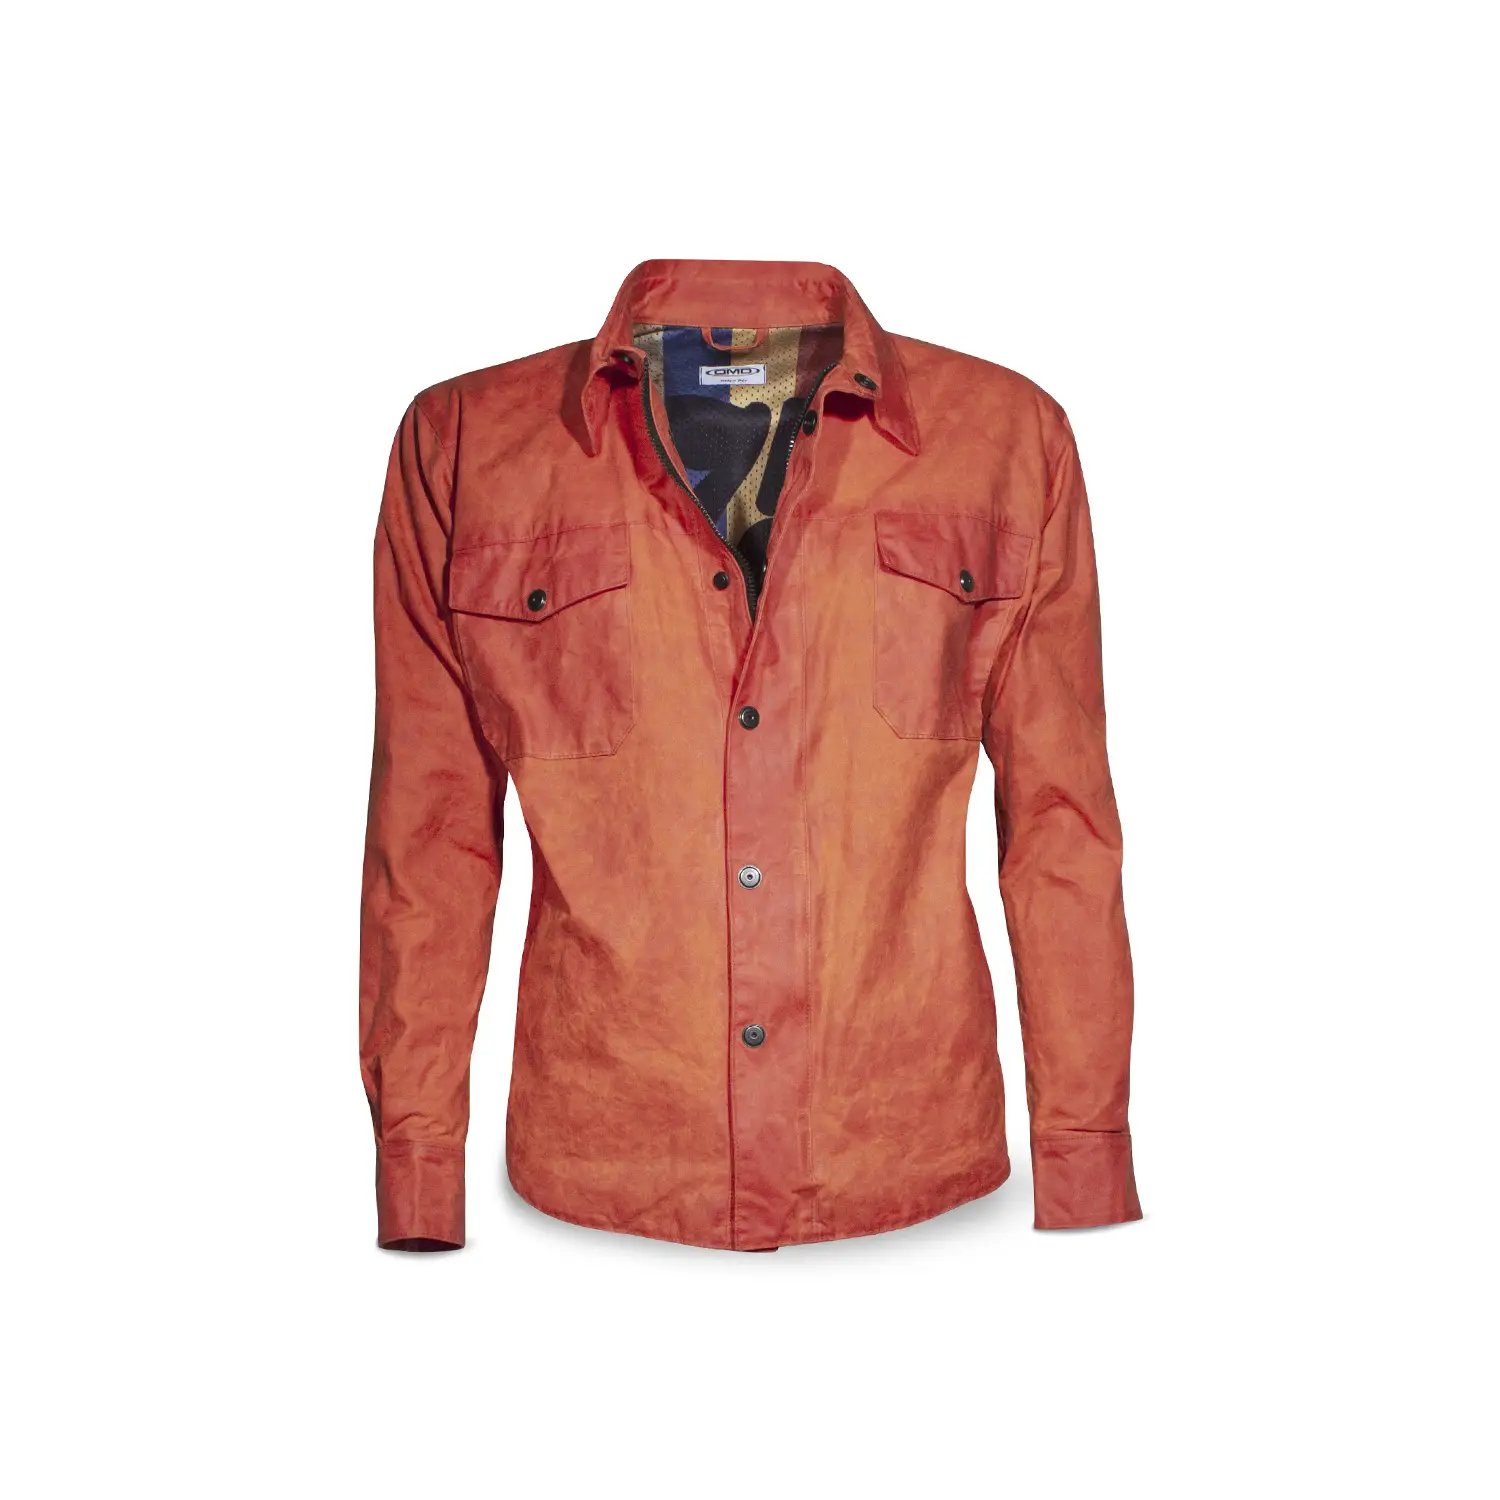 dmd.eu - SHIRT ORANGE (NICHT GENEHMIGT) DMD – Shirt Orange Waxed Cotton (non omologato) – front